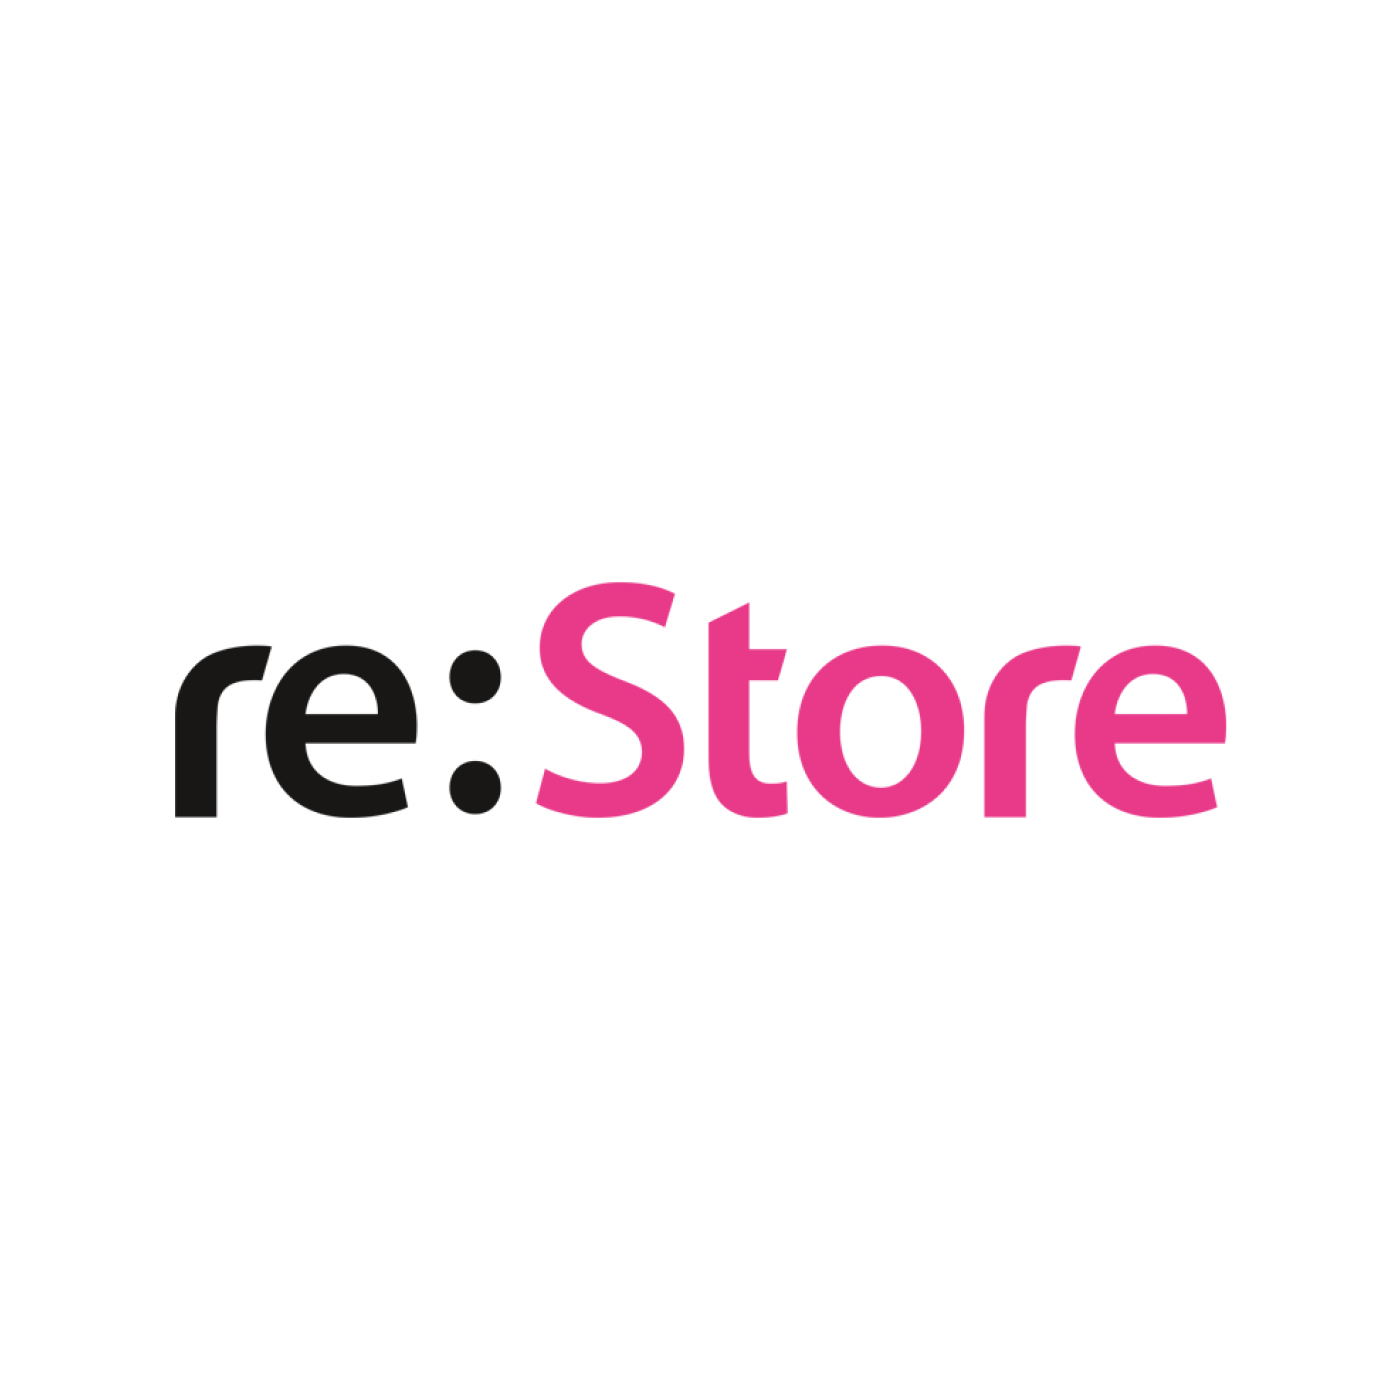 Euromastershop ru. Restore эмблема. Re Store. Ресторе логотип. Rem Store.